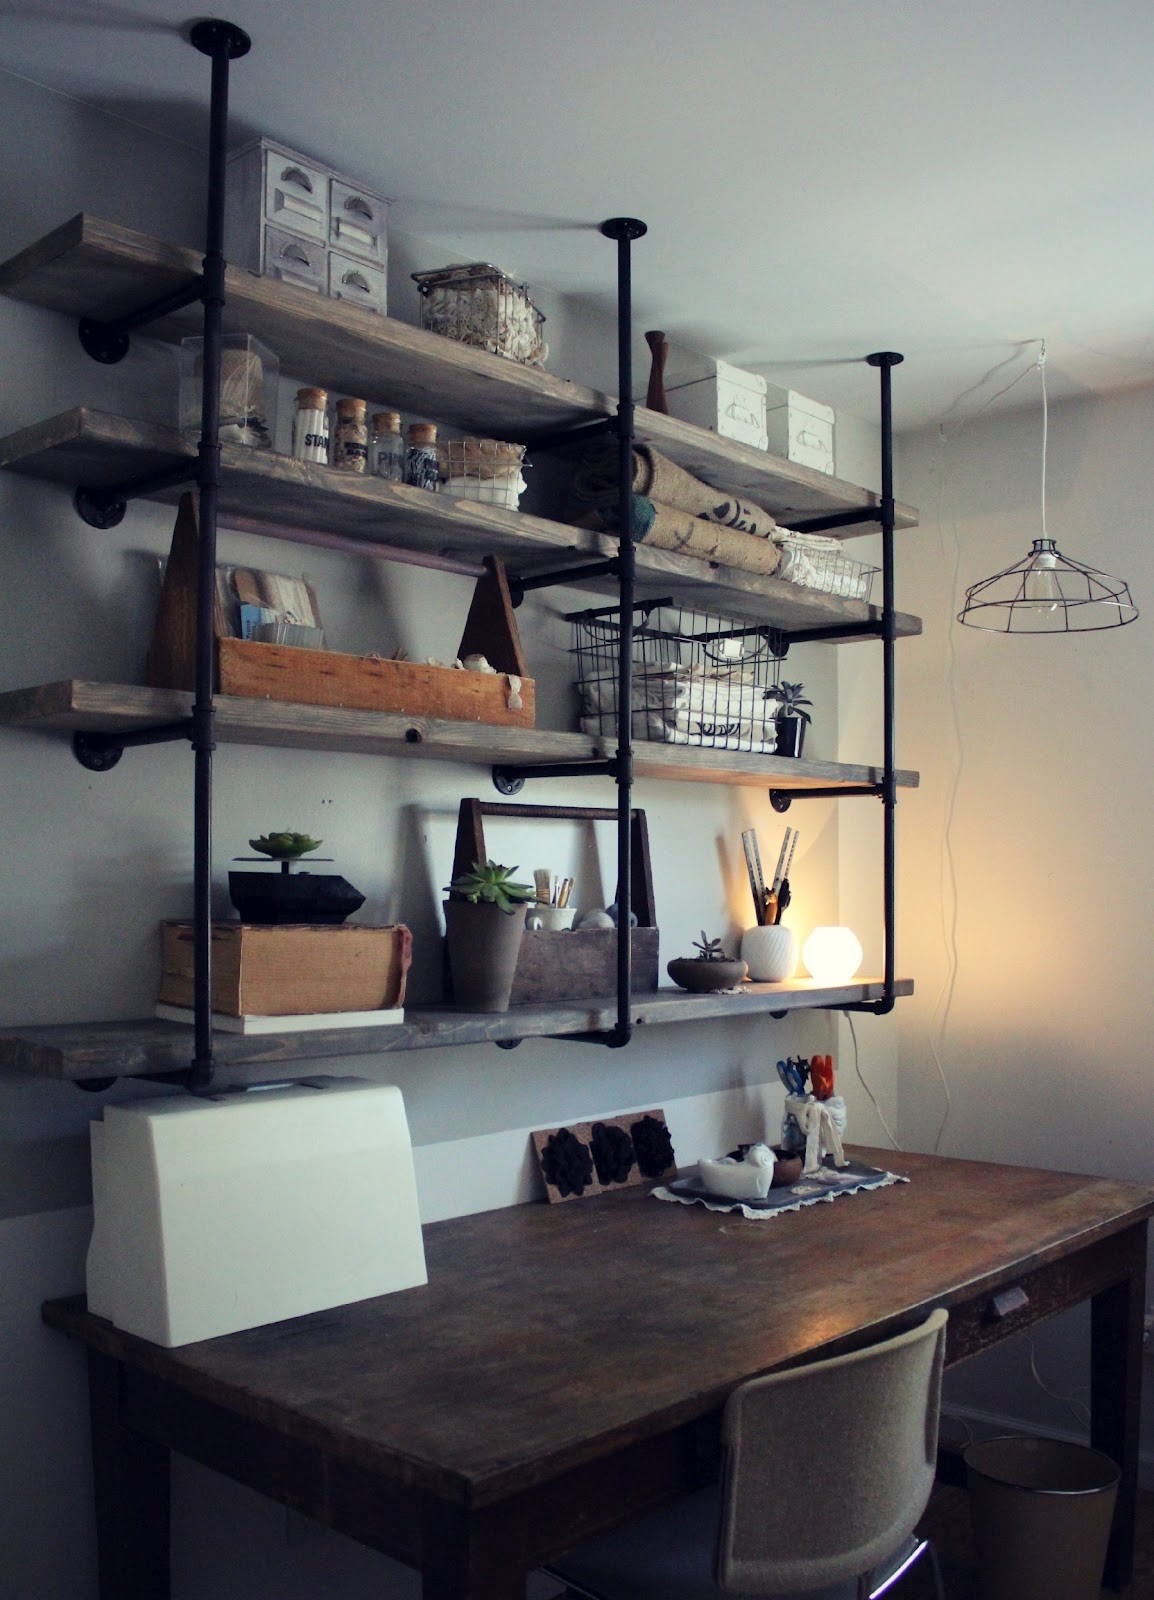 Wooden wall mounted shelves